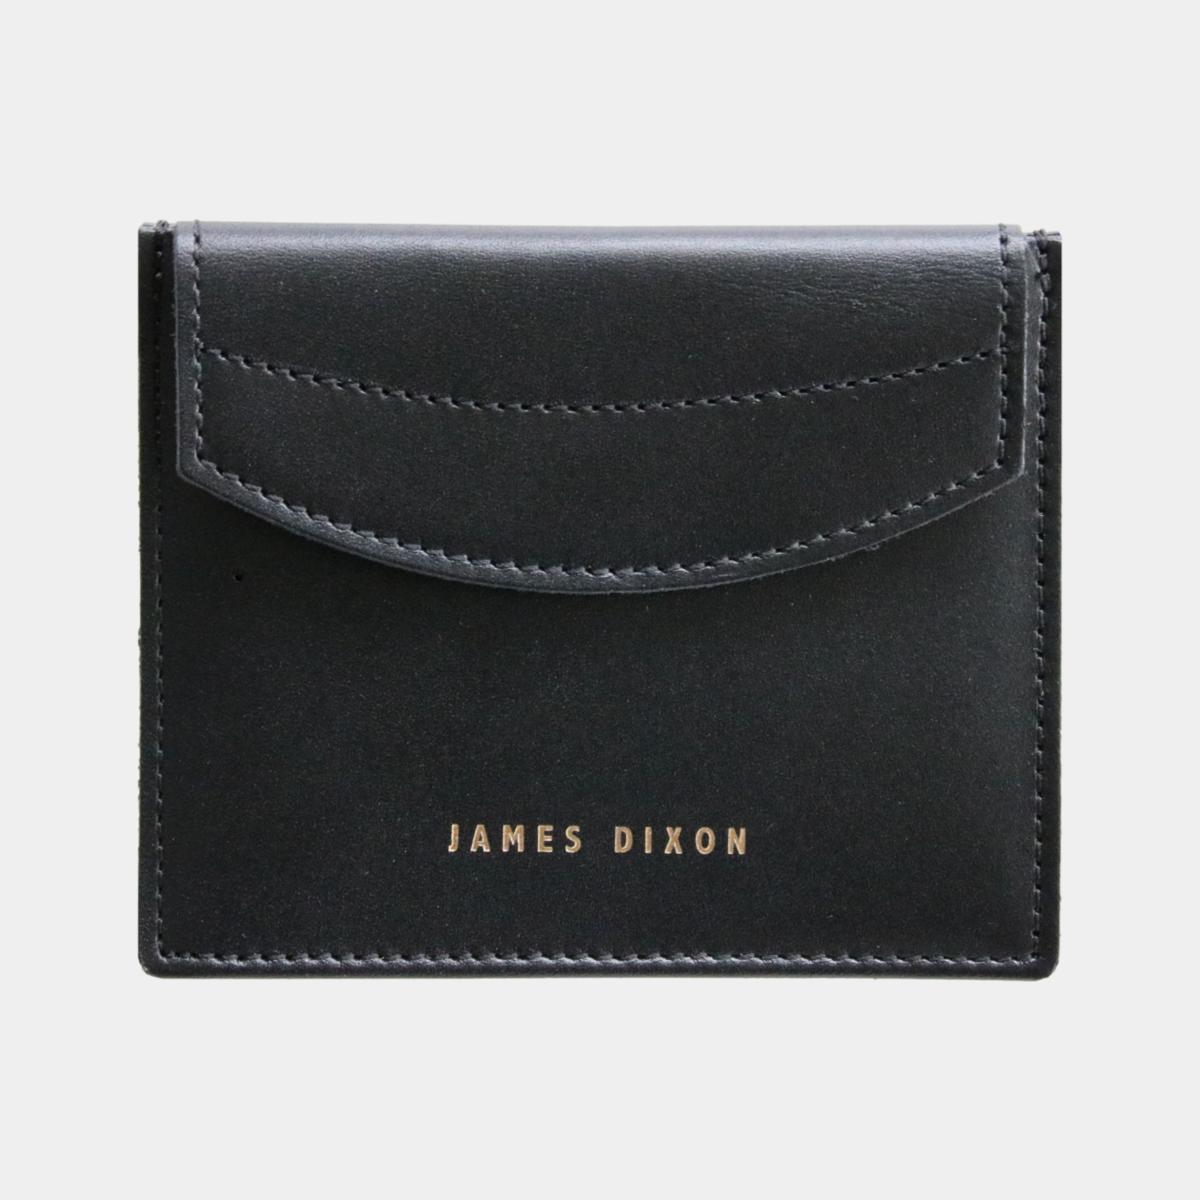 jd0326 james dixon poco one black coin pocket wallet front